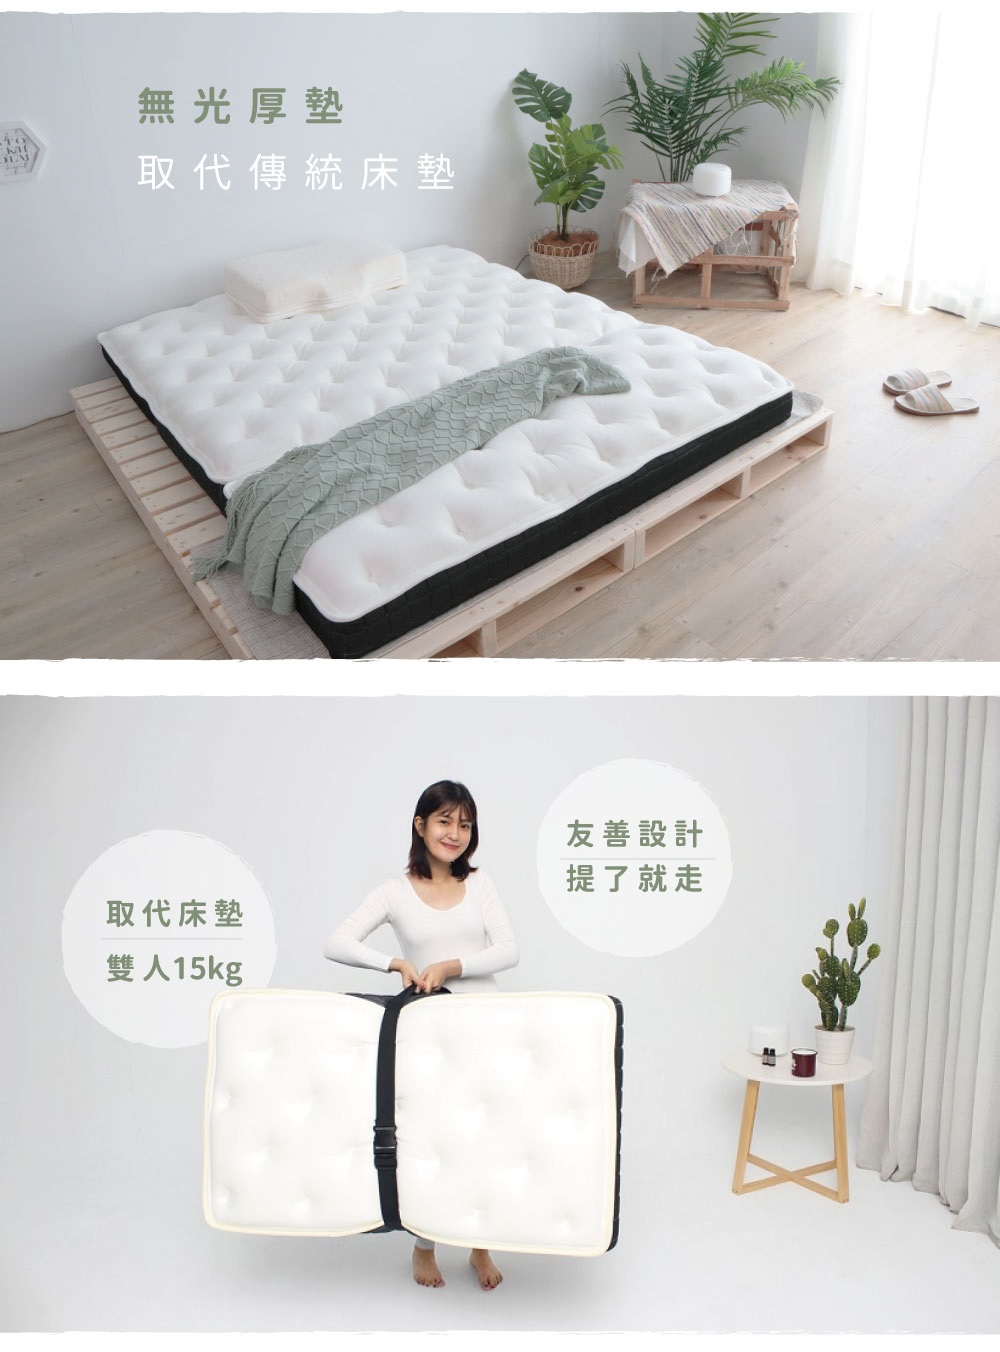 LoveFu 無光厚墊 標準單人3尺 + 月眠枕 基本款(厚